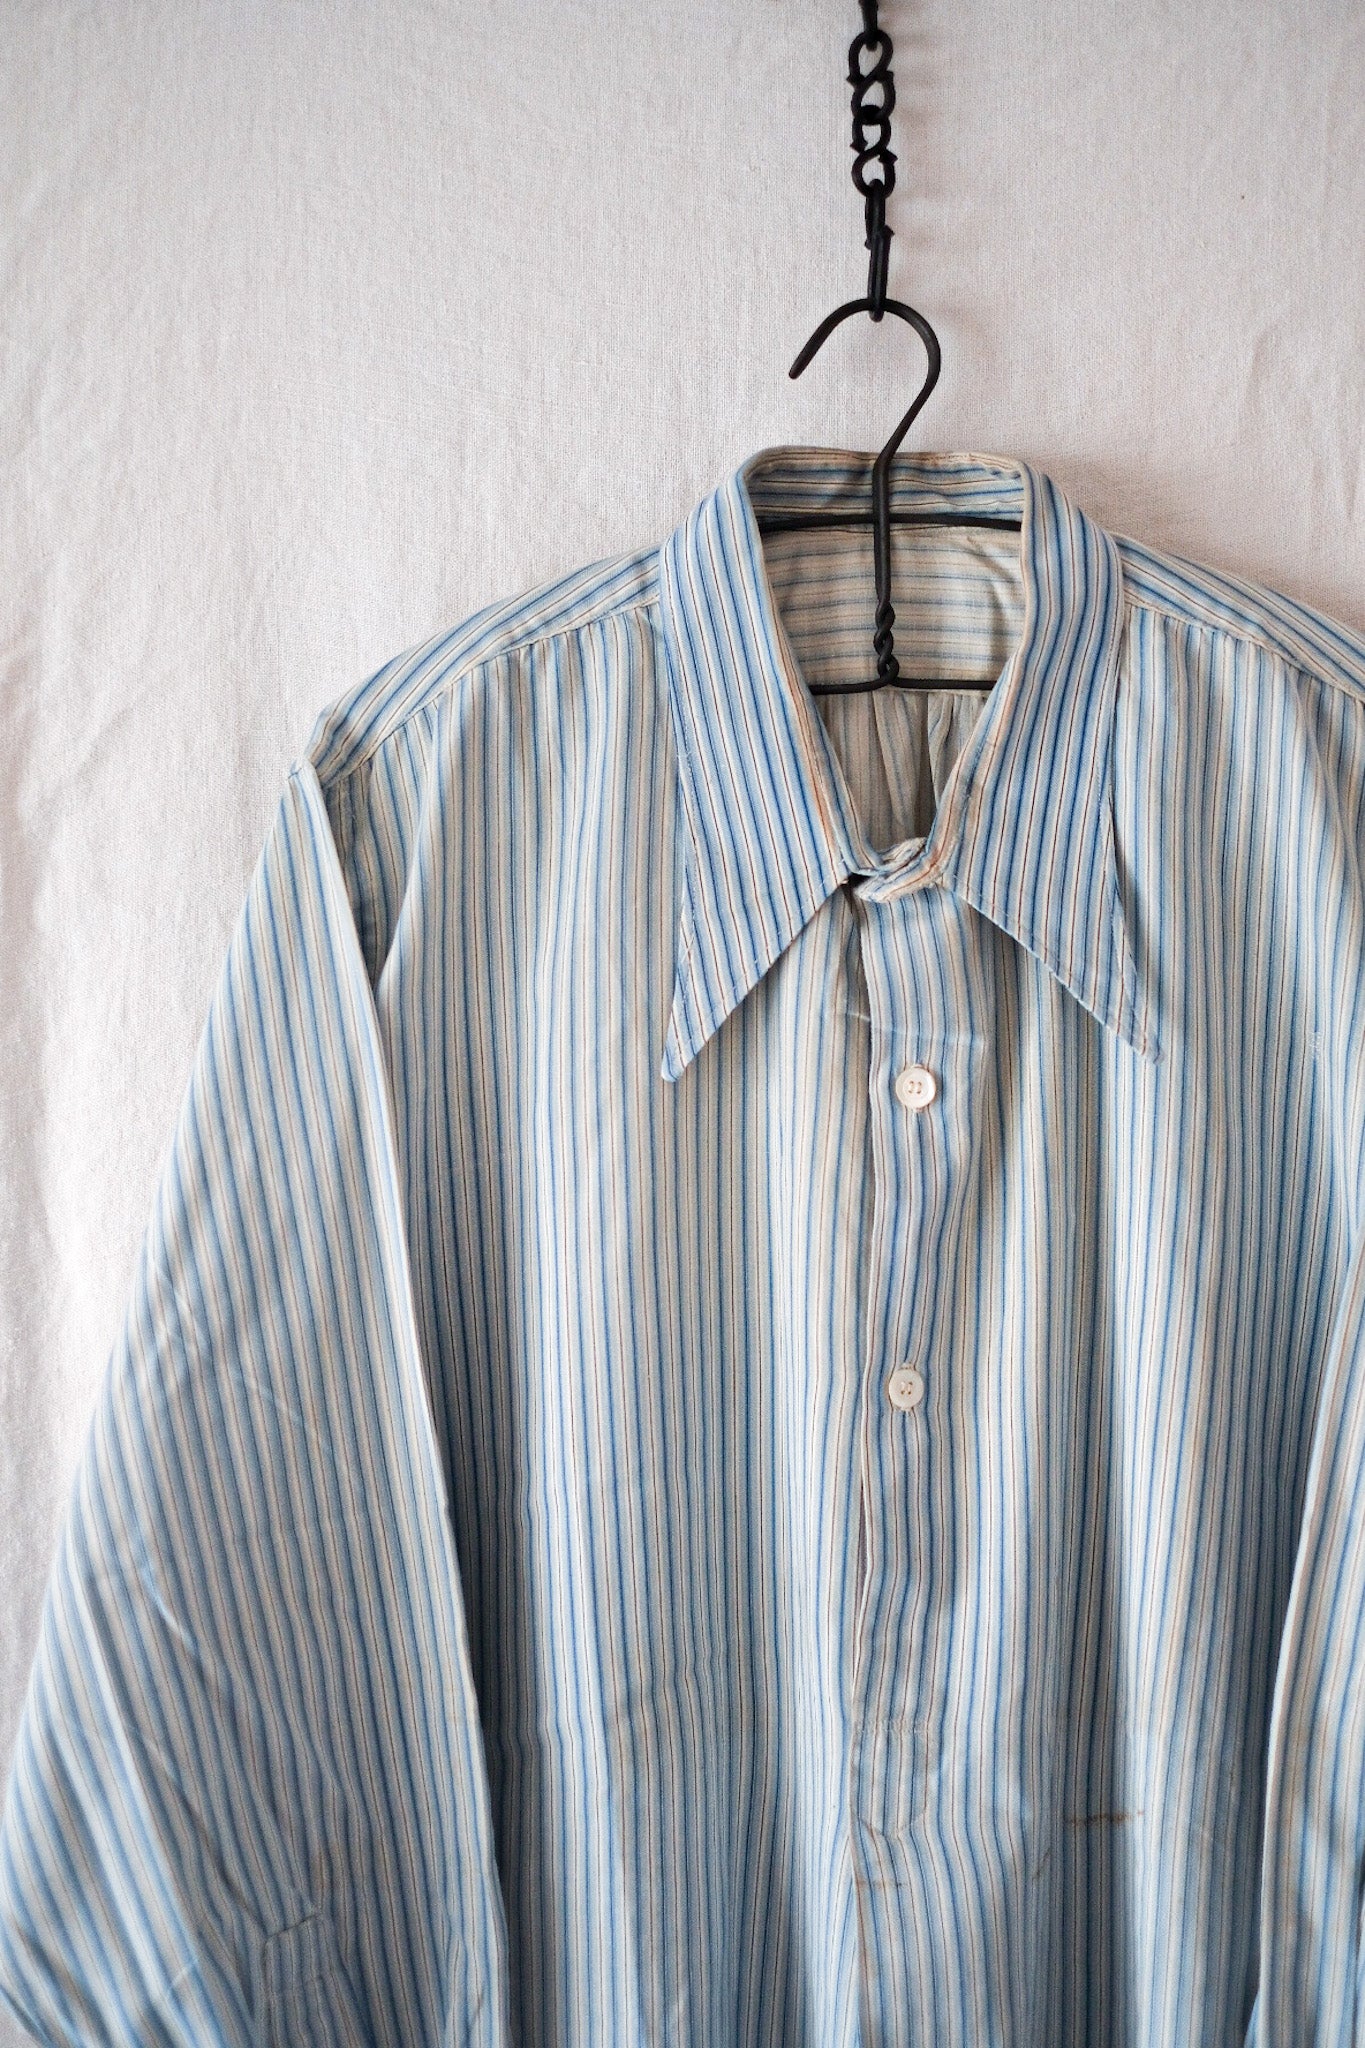 【~20's】French Antique Grandpa Shirt